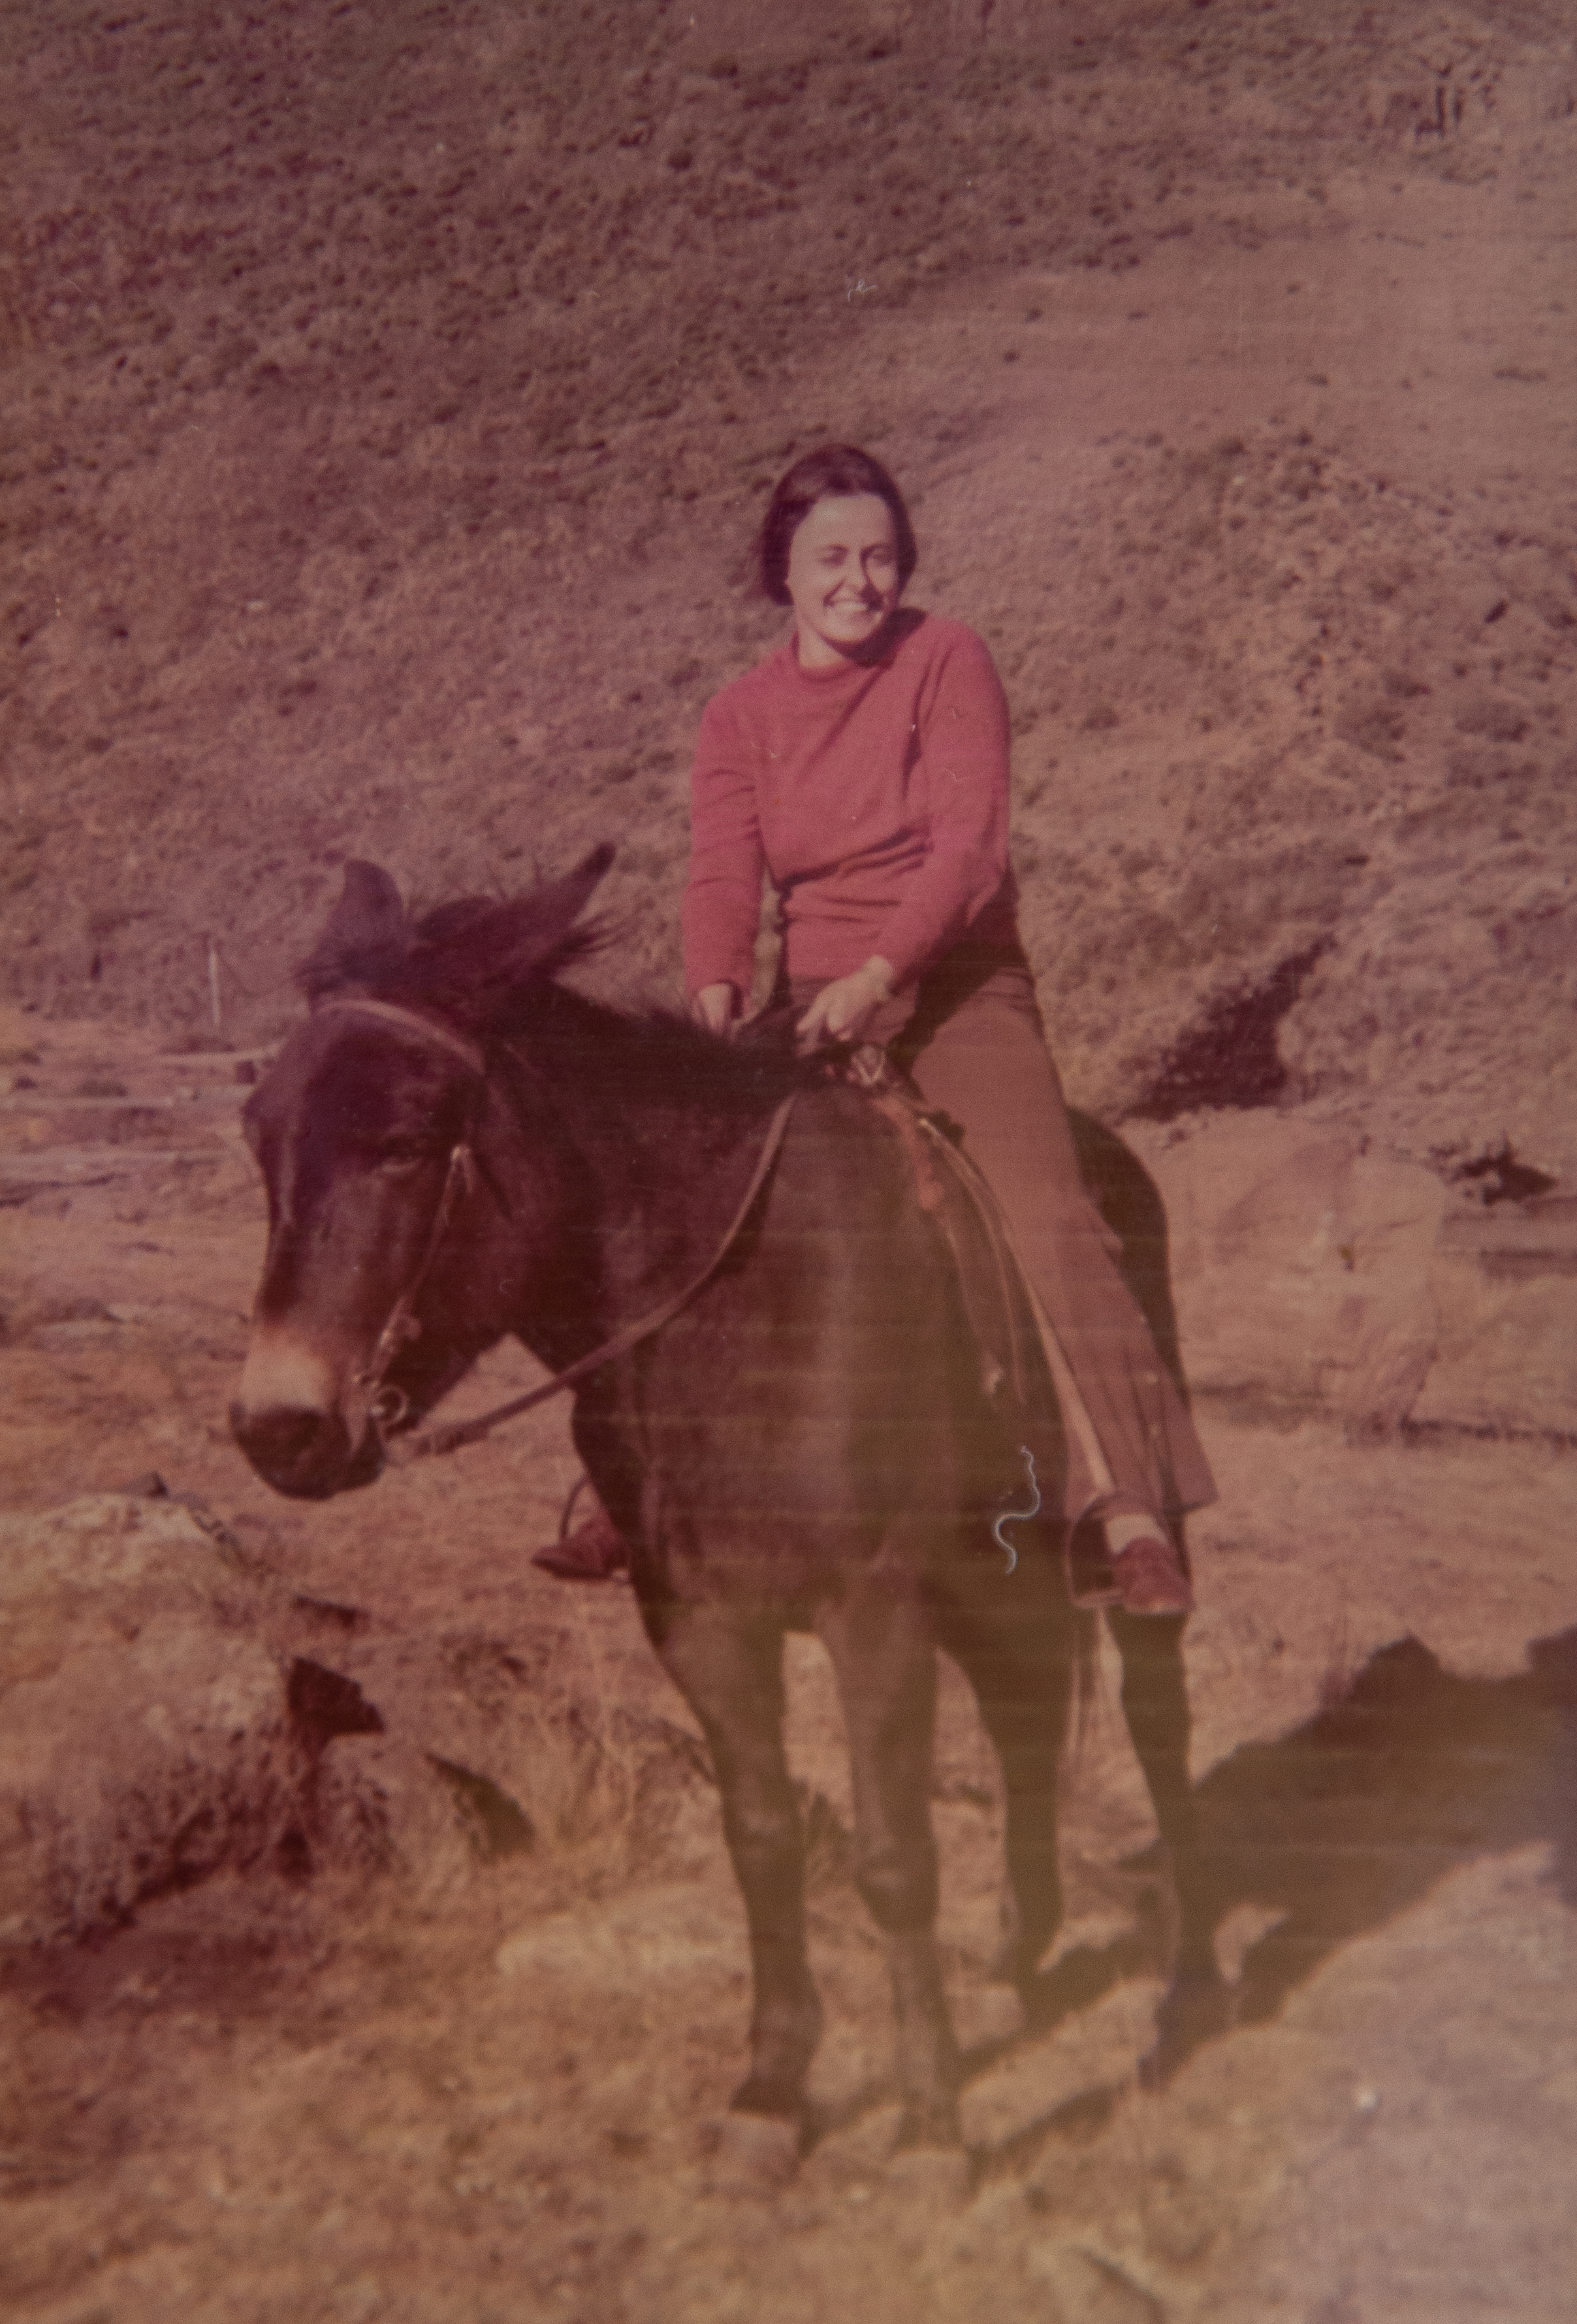 Milena Pechoušová on horseback, 1970s